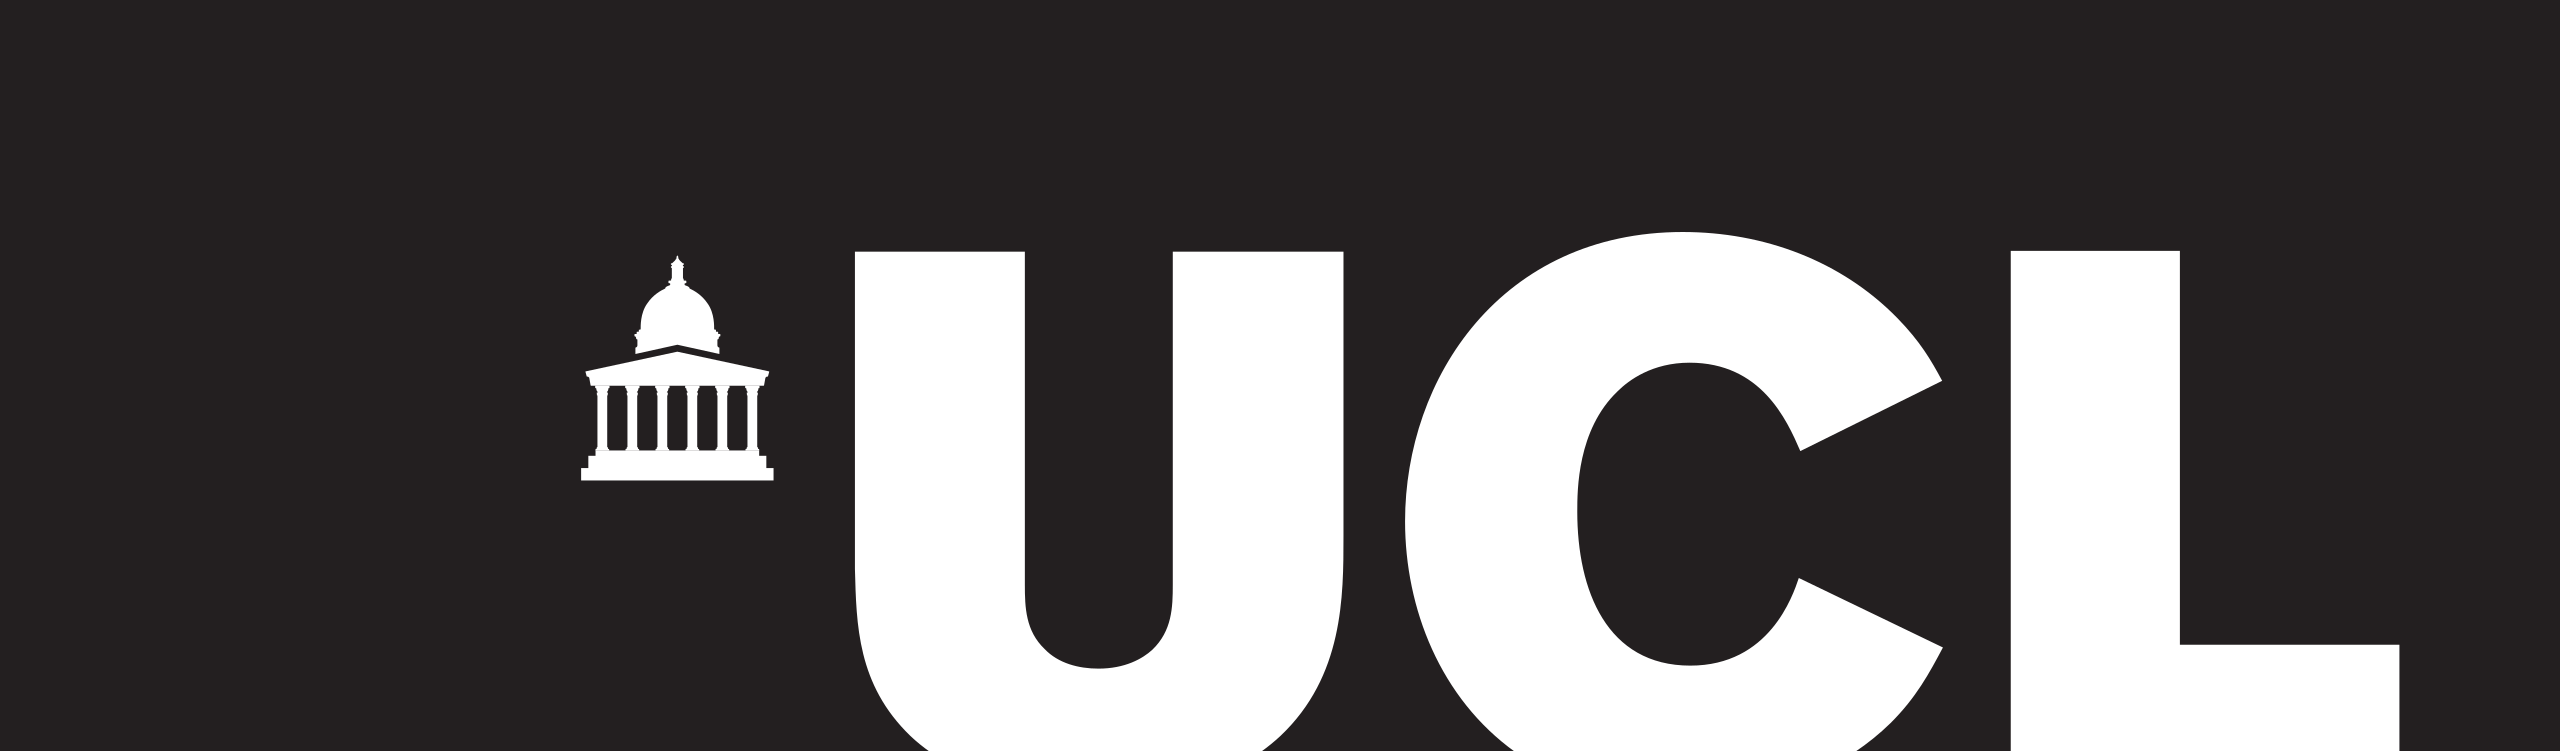 2560px-University_College_London_logo.svg